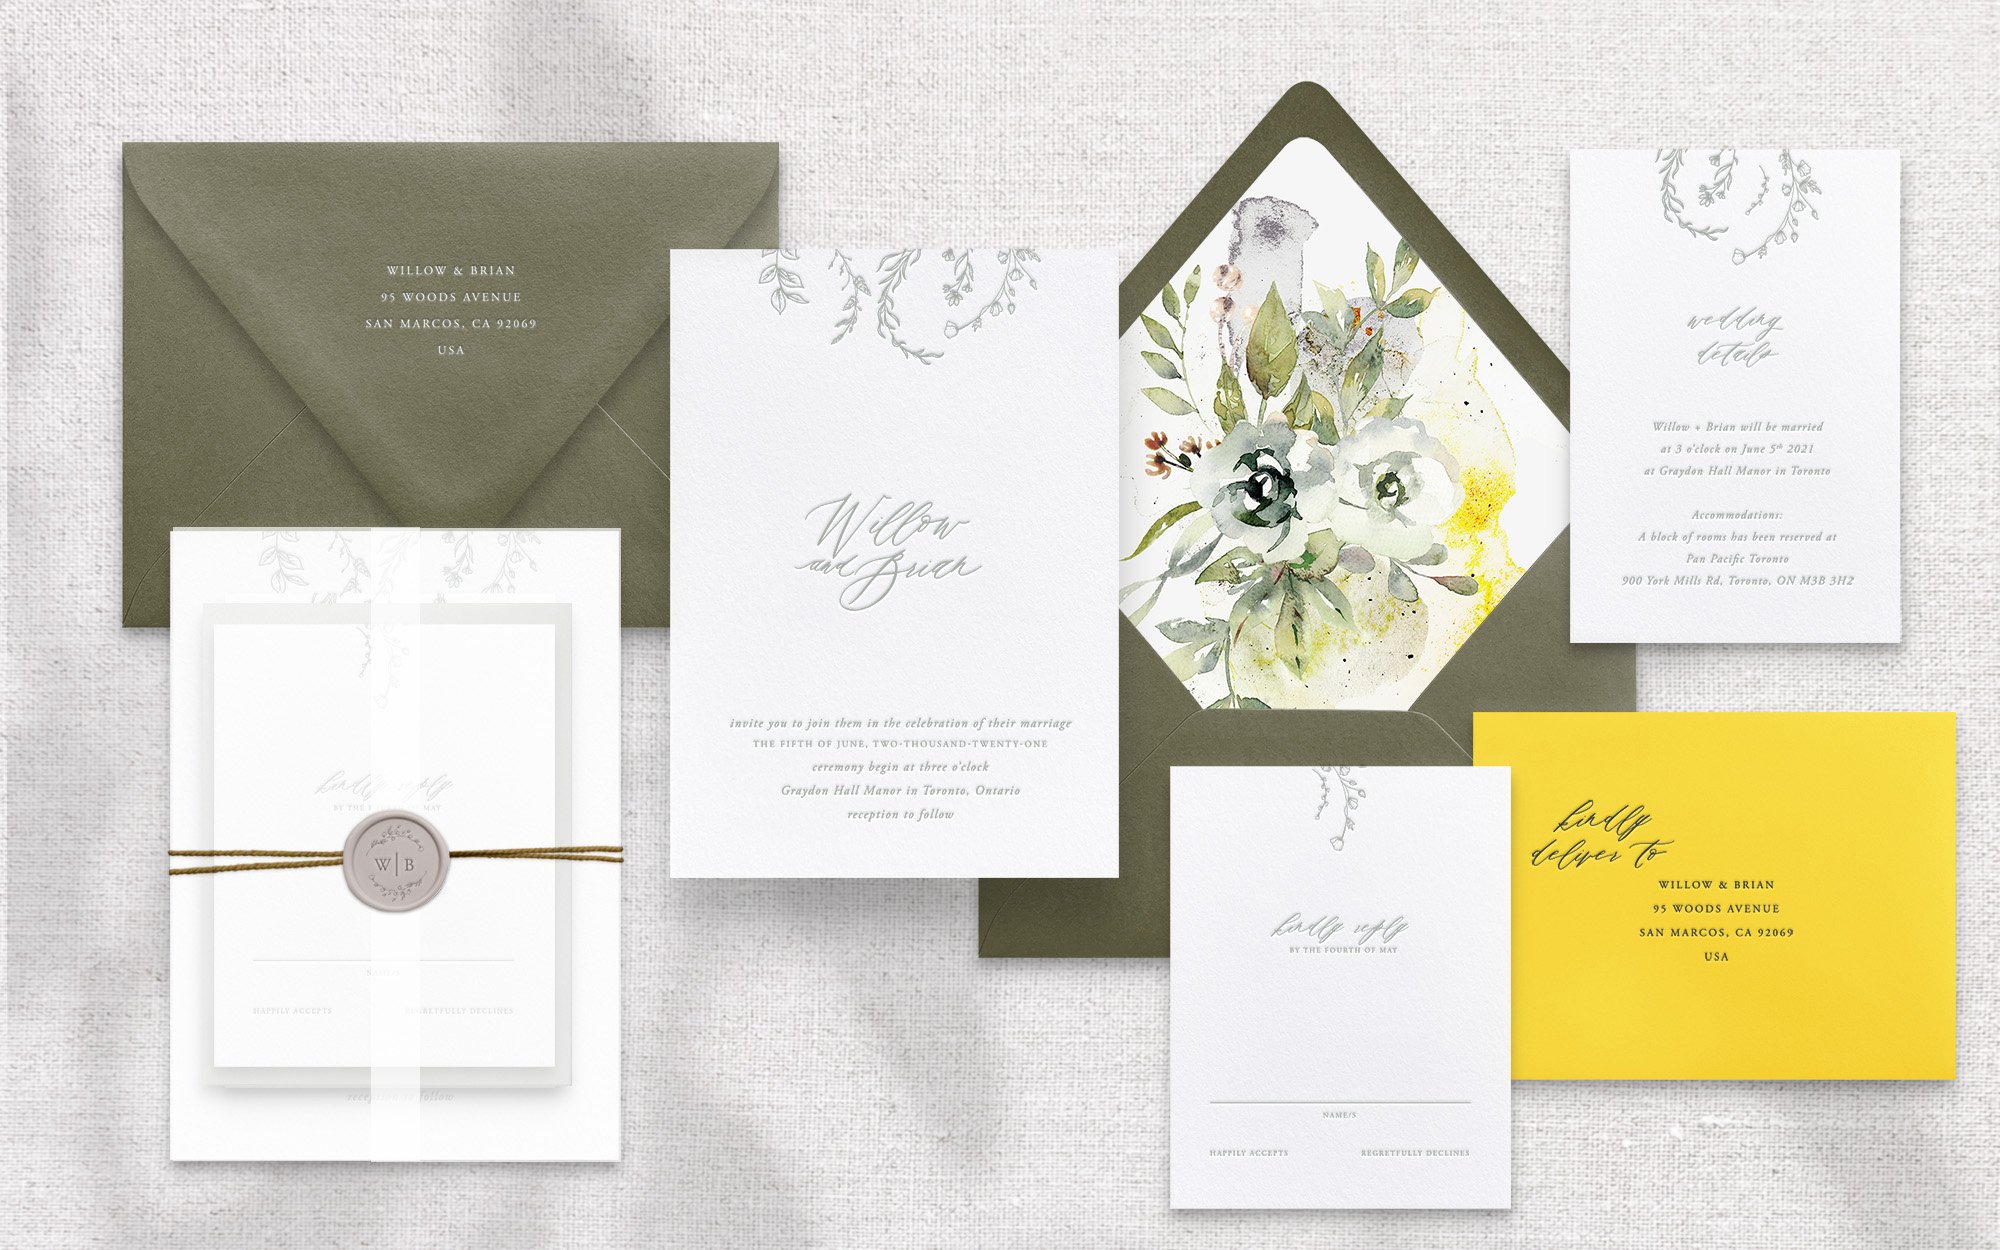 Wedding Collection semi-custom invitations - Wild Collection@1x.jpg